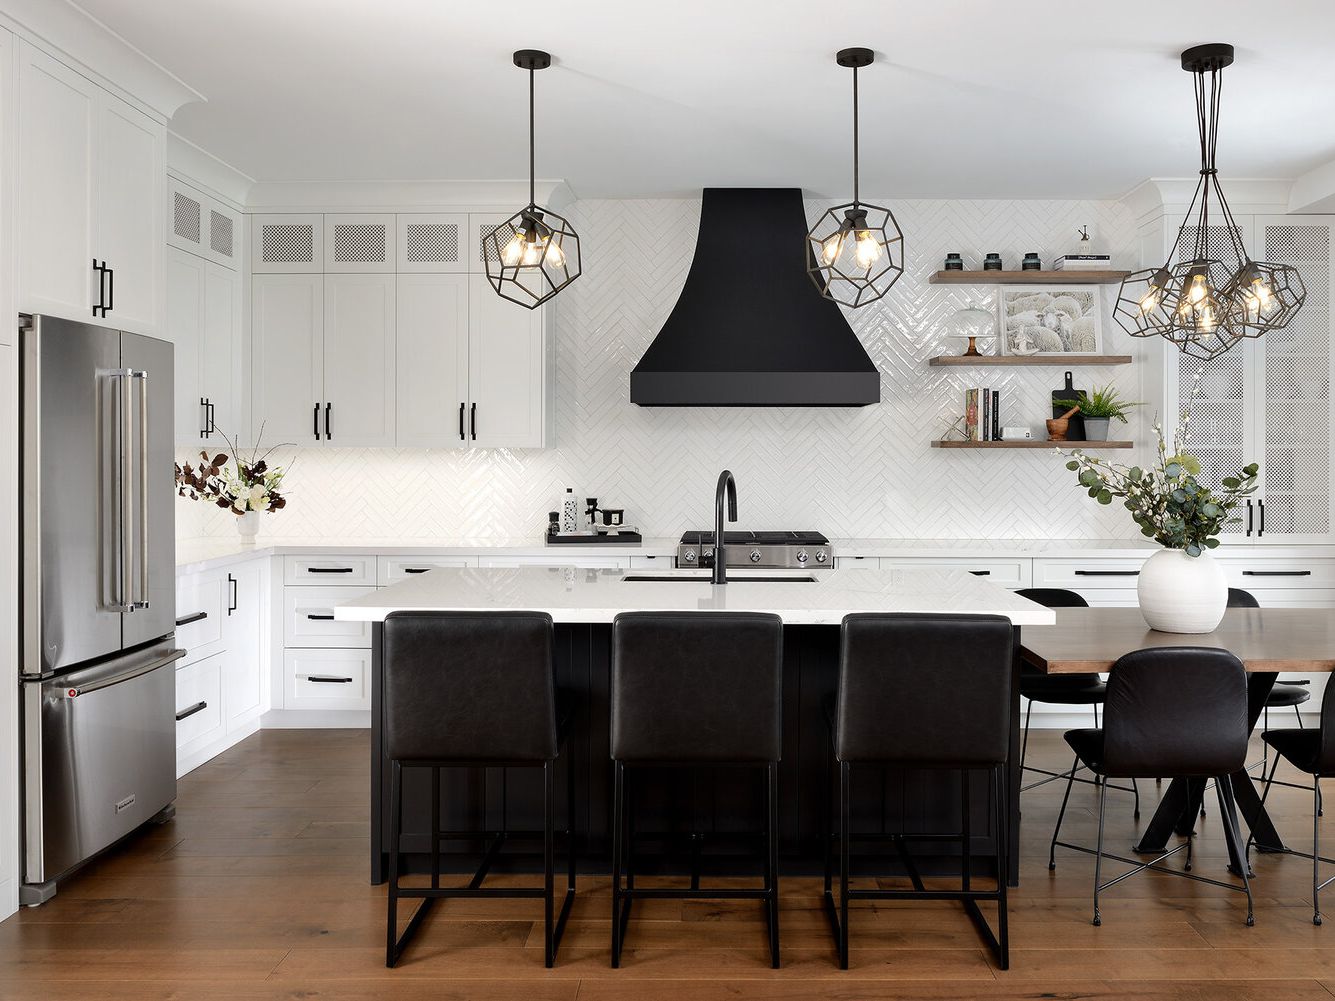 Gynok - QnA & Blogging Platform - 11 Interior Decorating Ideas for Your Kitchen 2022